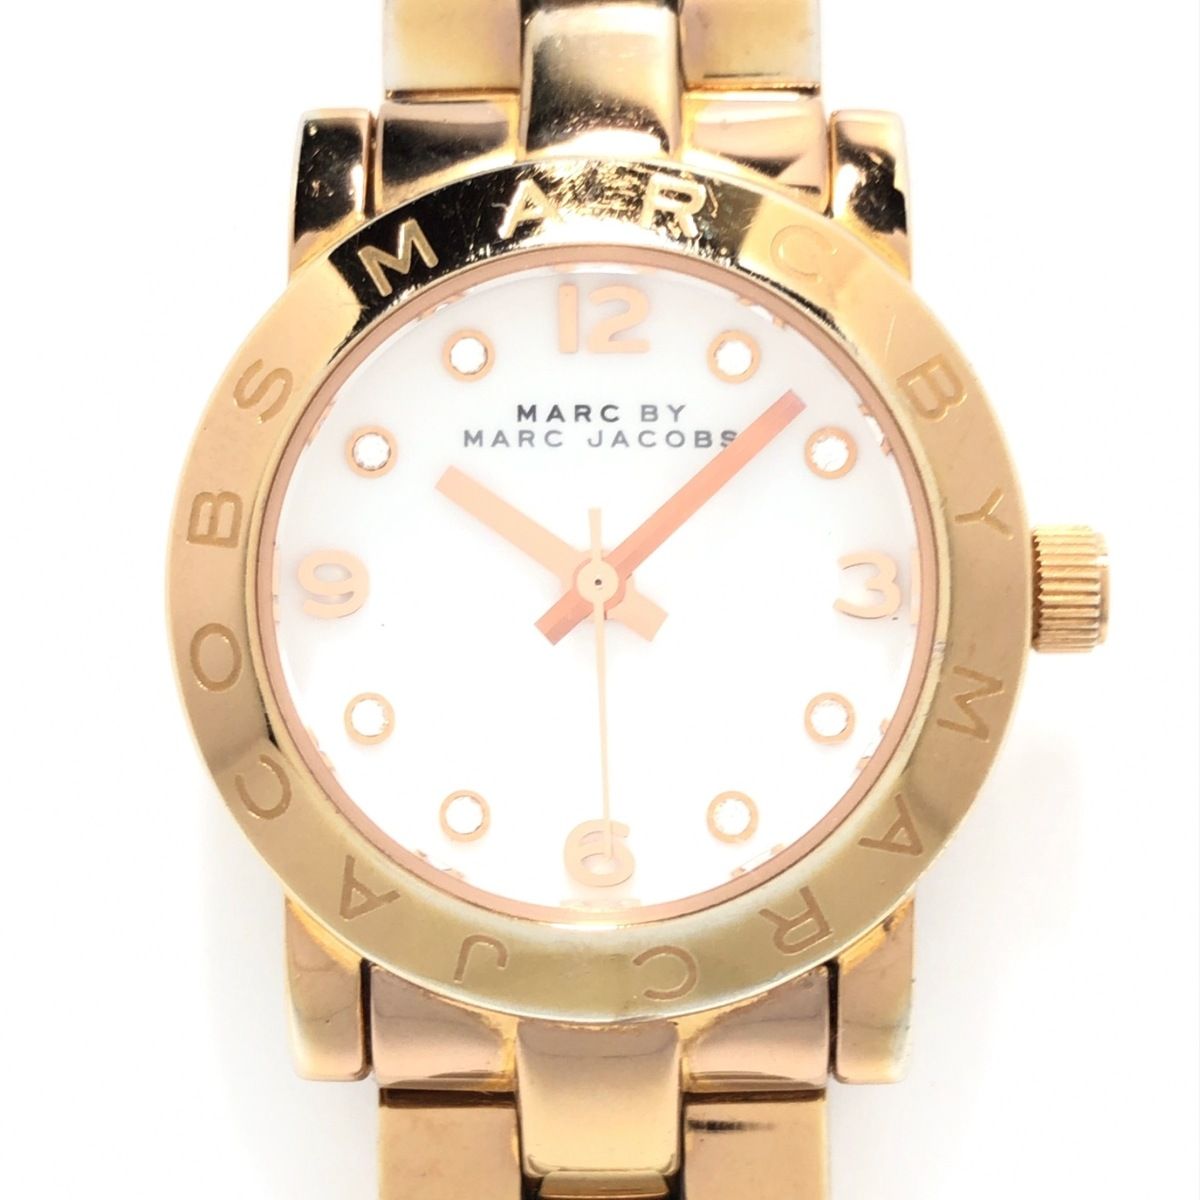 MARC BY MARC JACOBS(マークジェイコブス) 腕時計 - MBM3078 レディース ラインストーン アイボリー